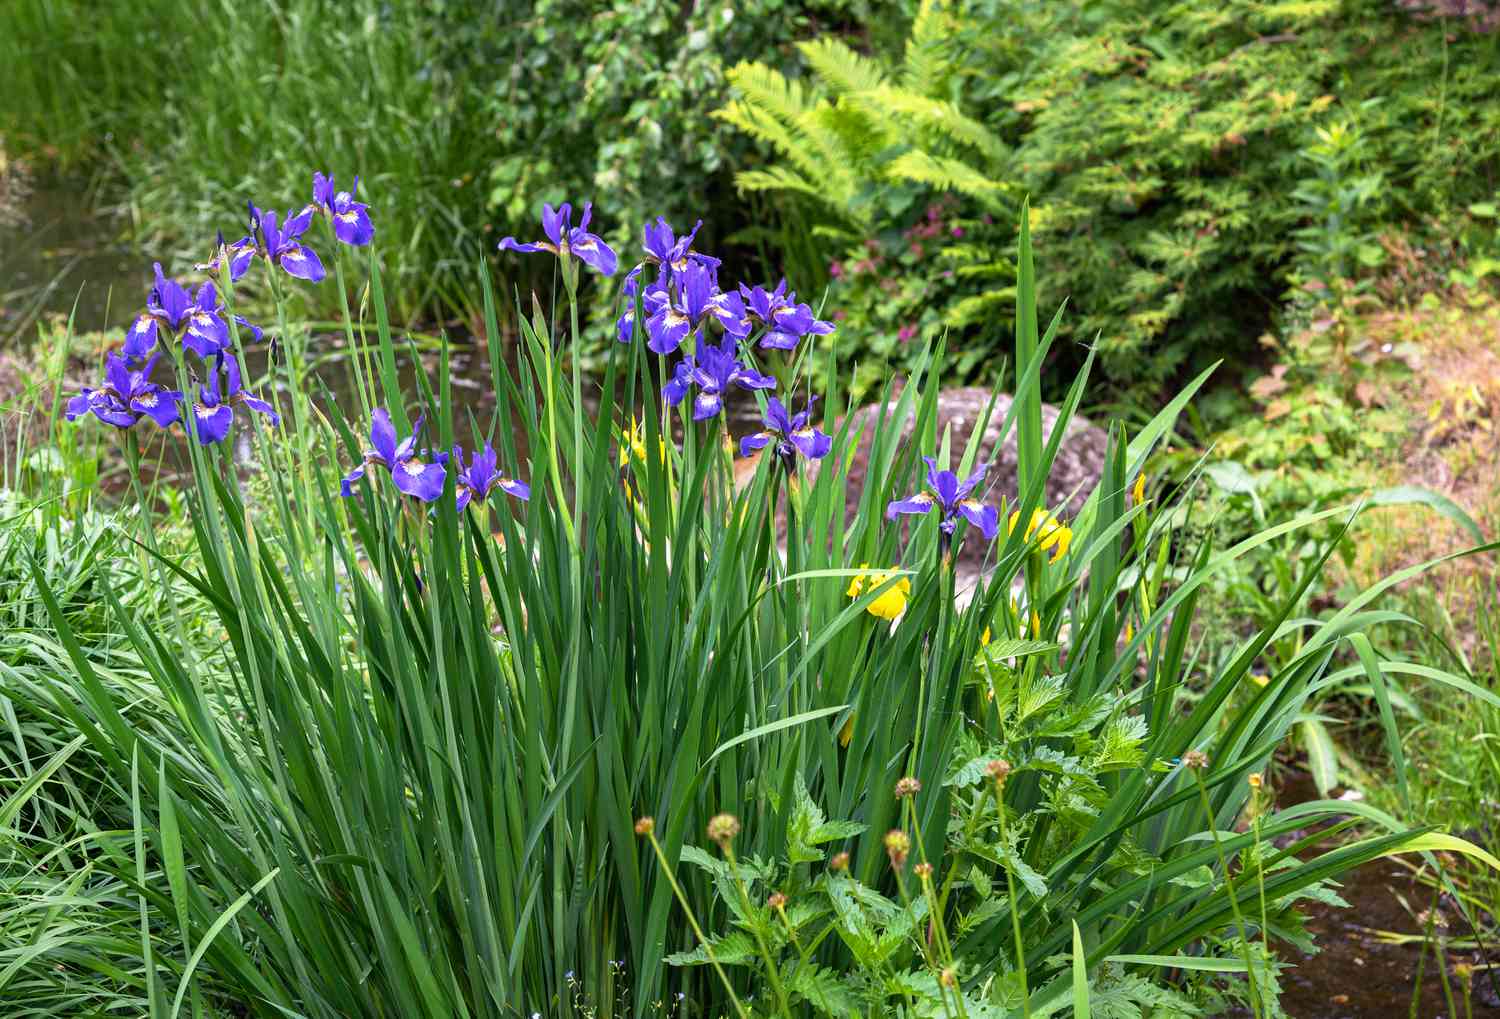 Iris siberiano con flores moradas en tallos altos en jardín de ciénaga